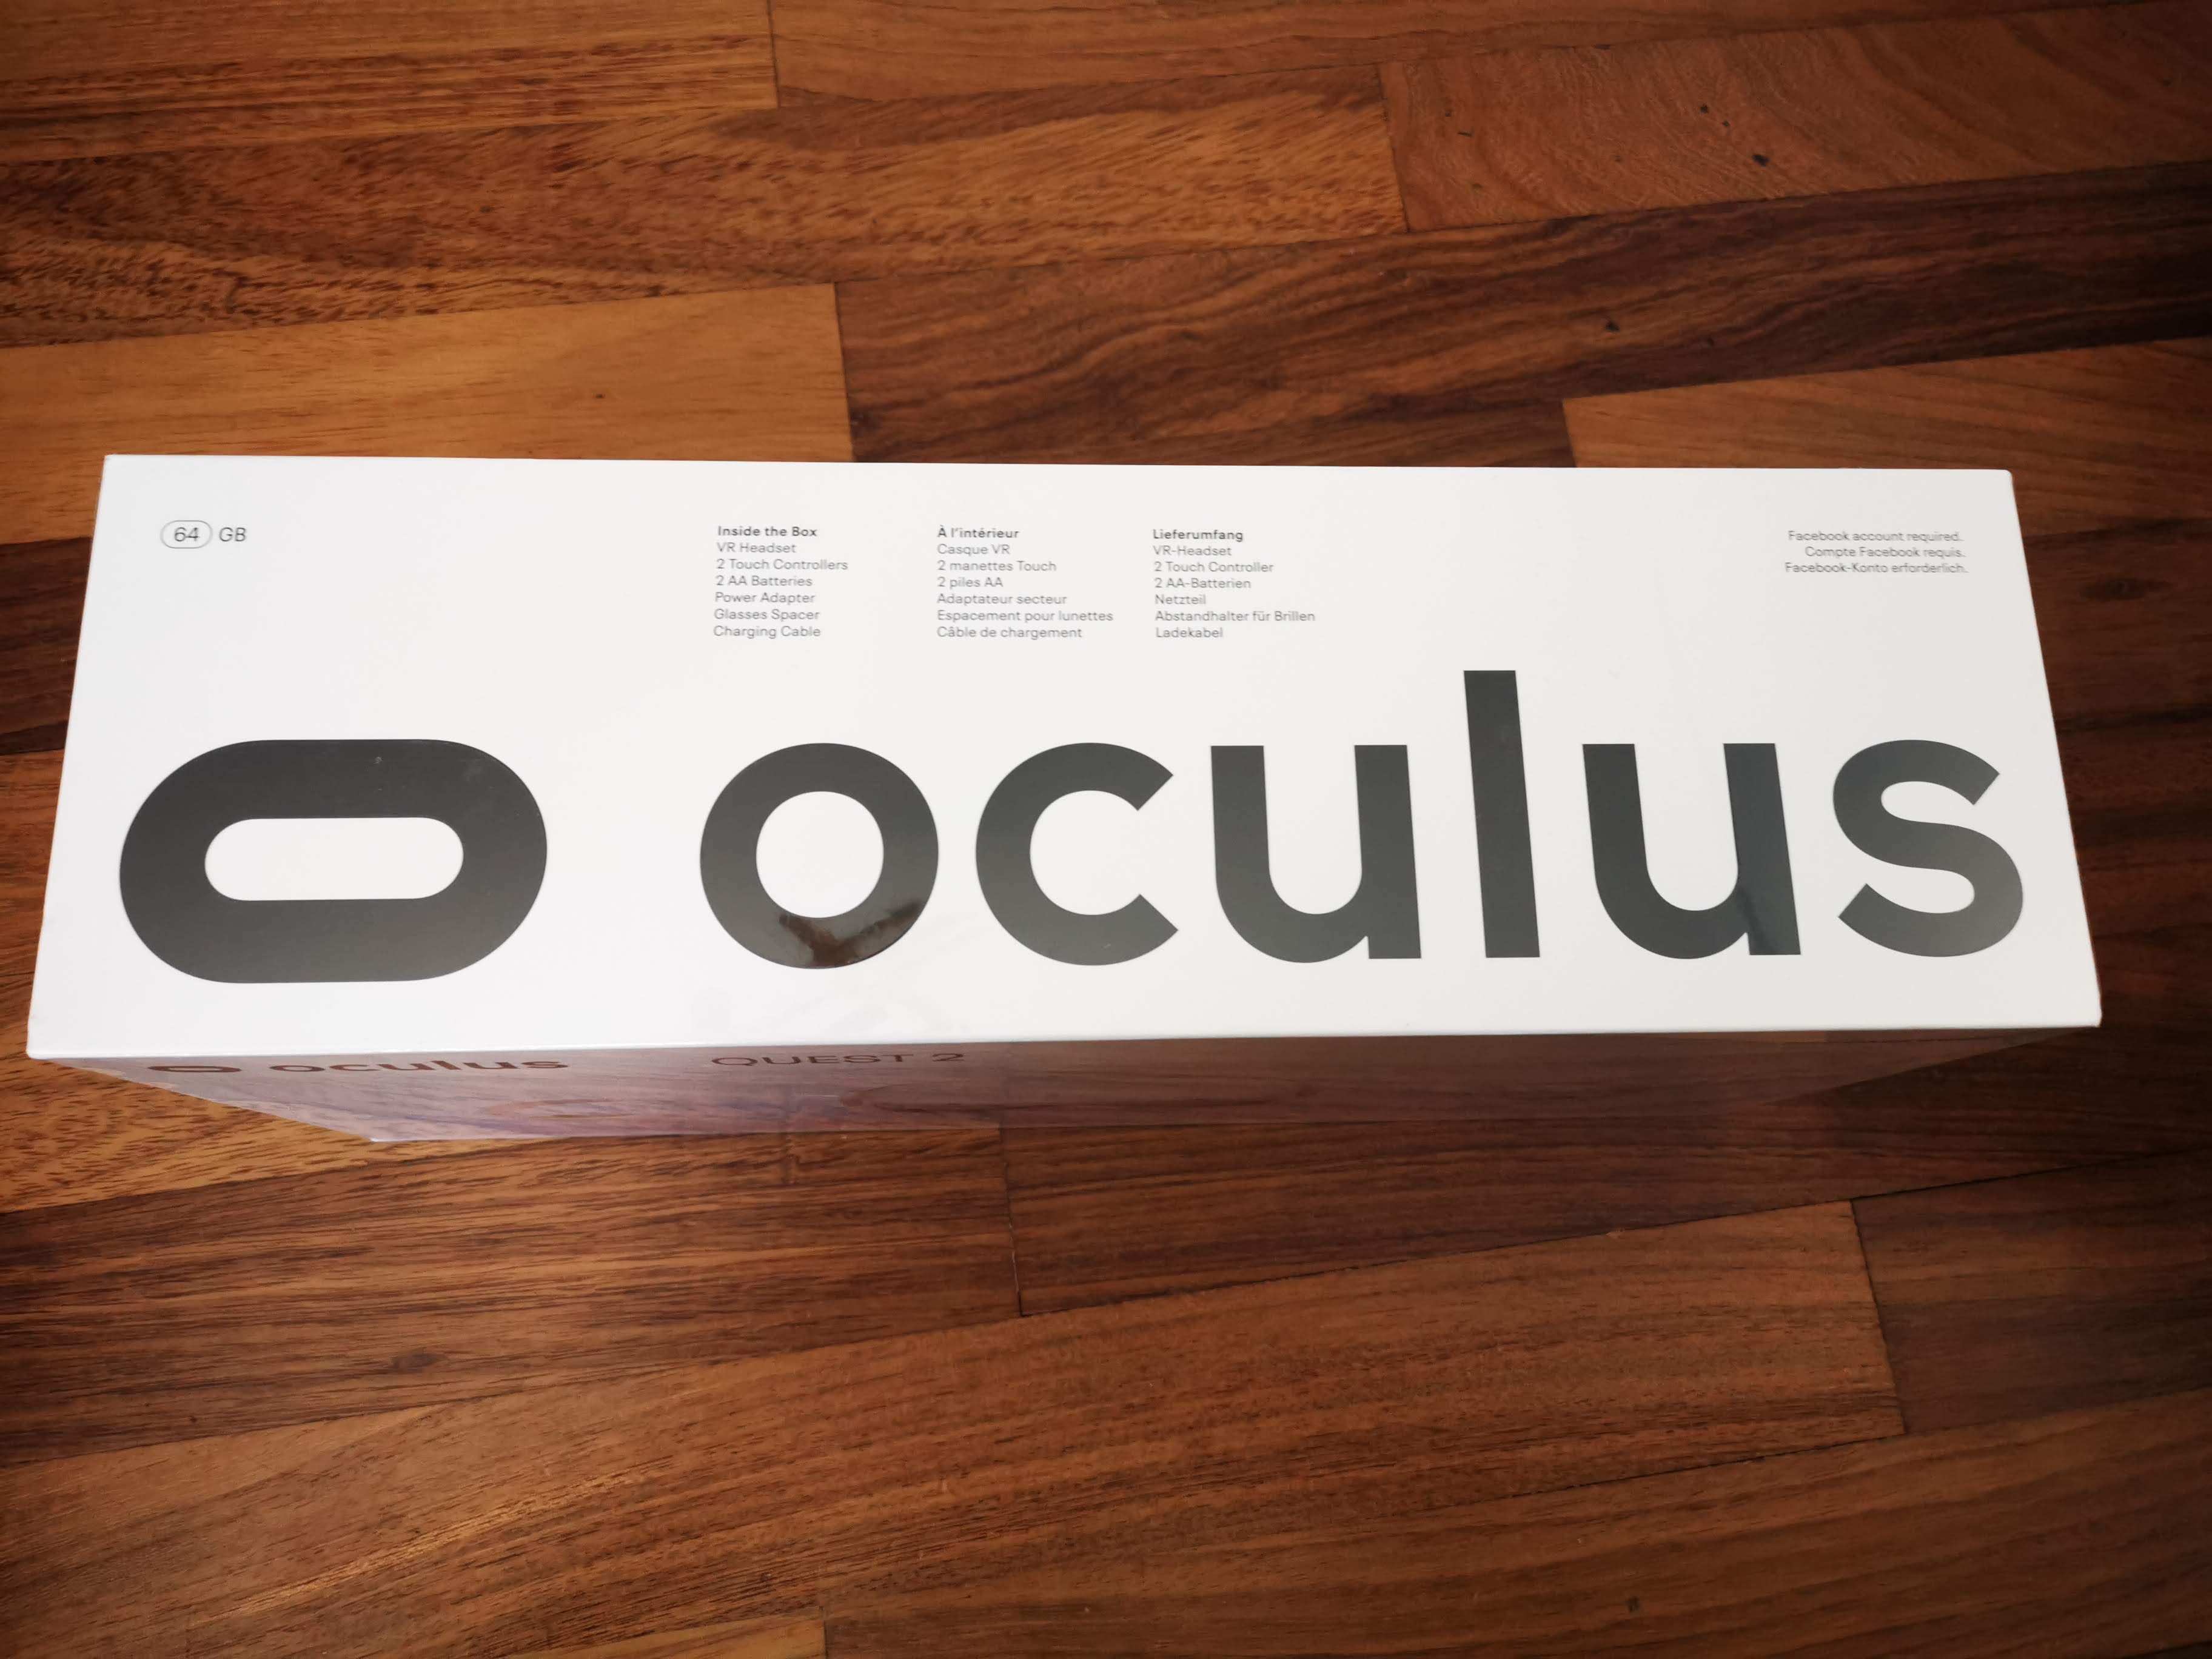 oculus quest skroutz